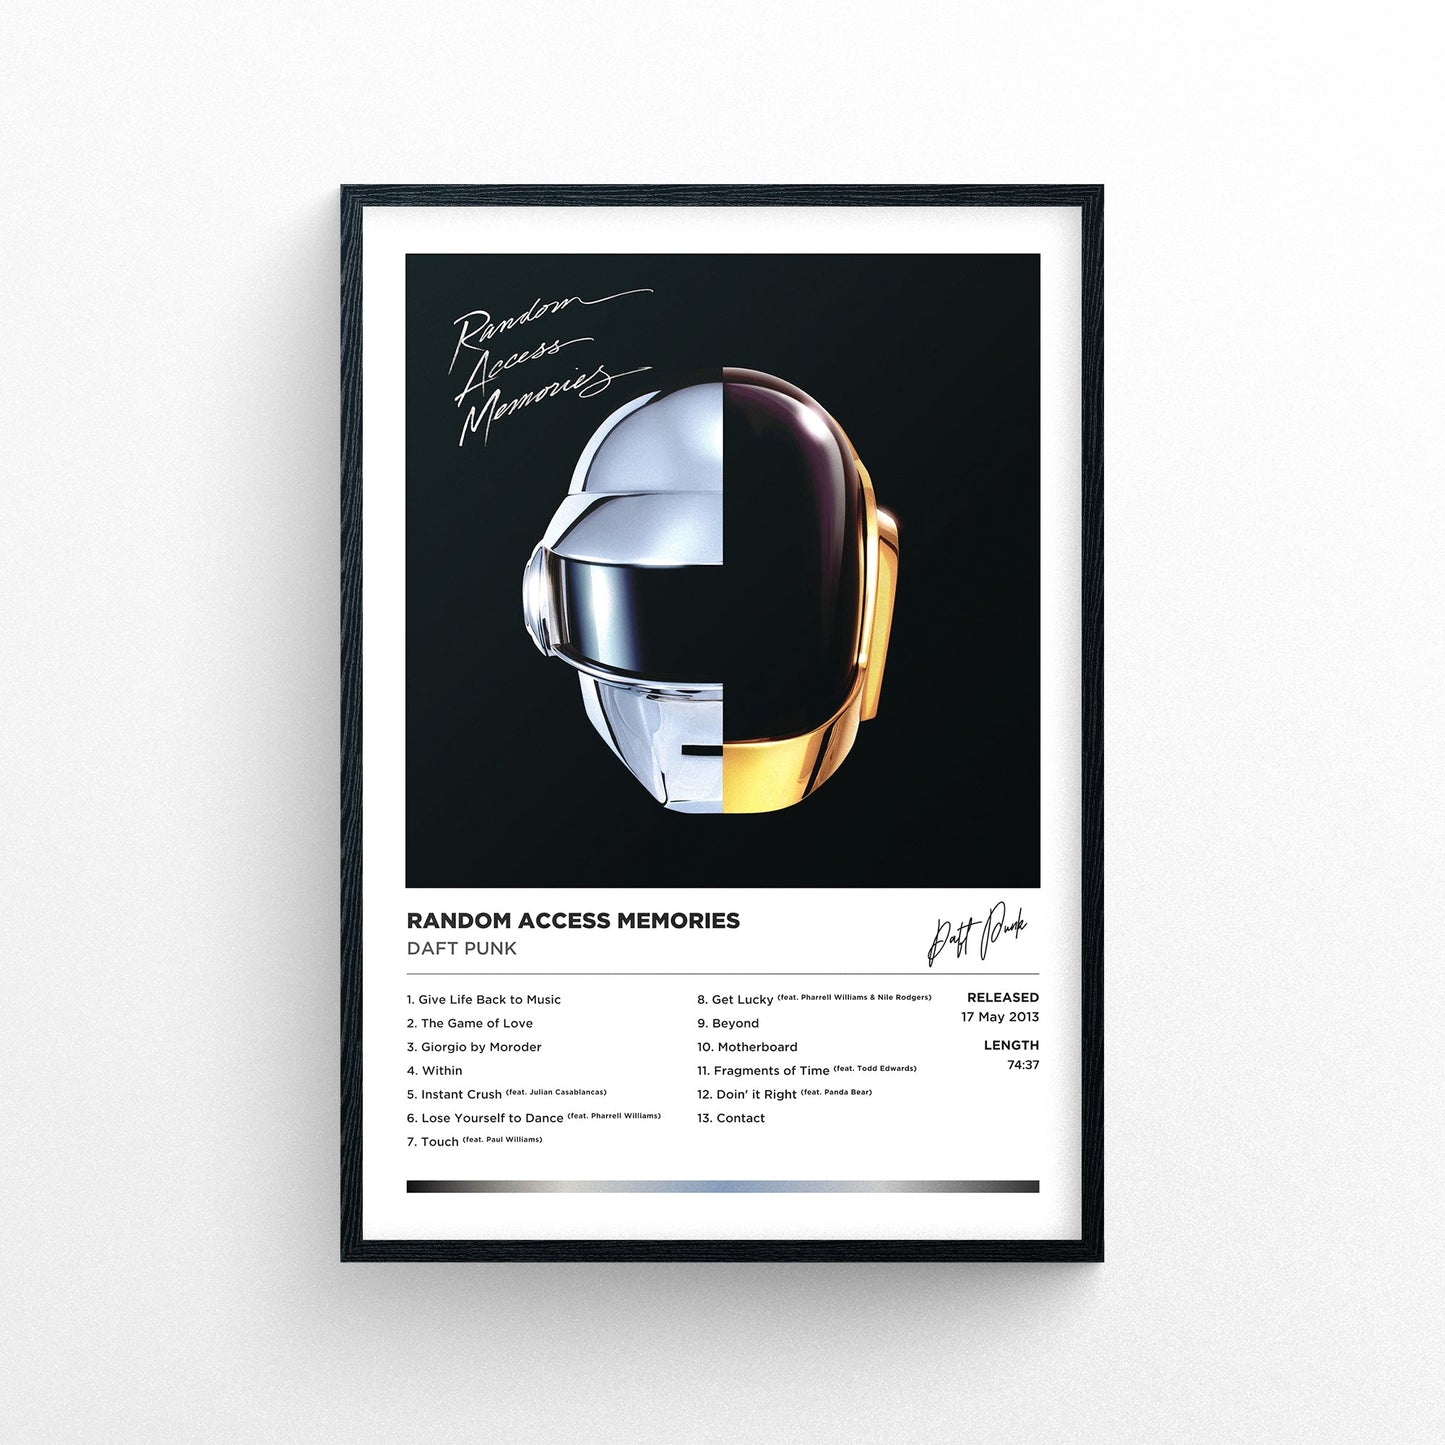 Daft Punk - Random Access Memories Framed Poster Print | Polaroid Style | Album Cover Artwork